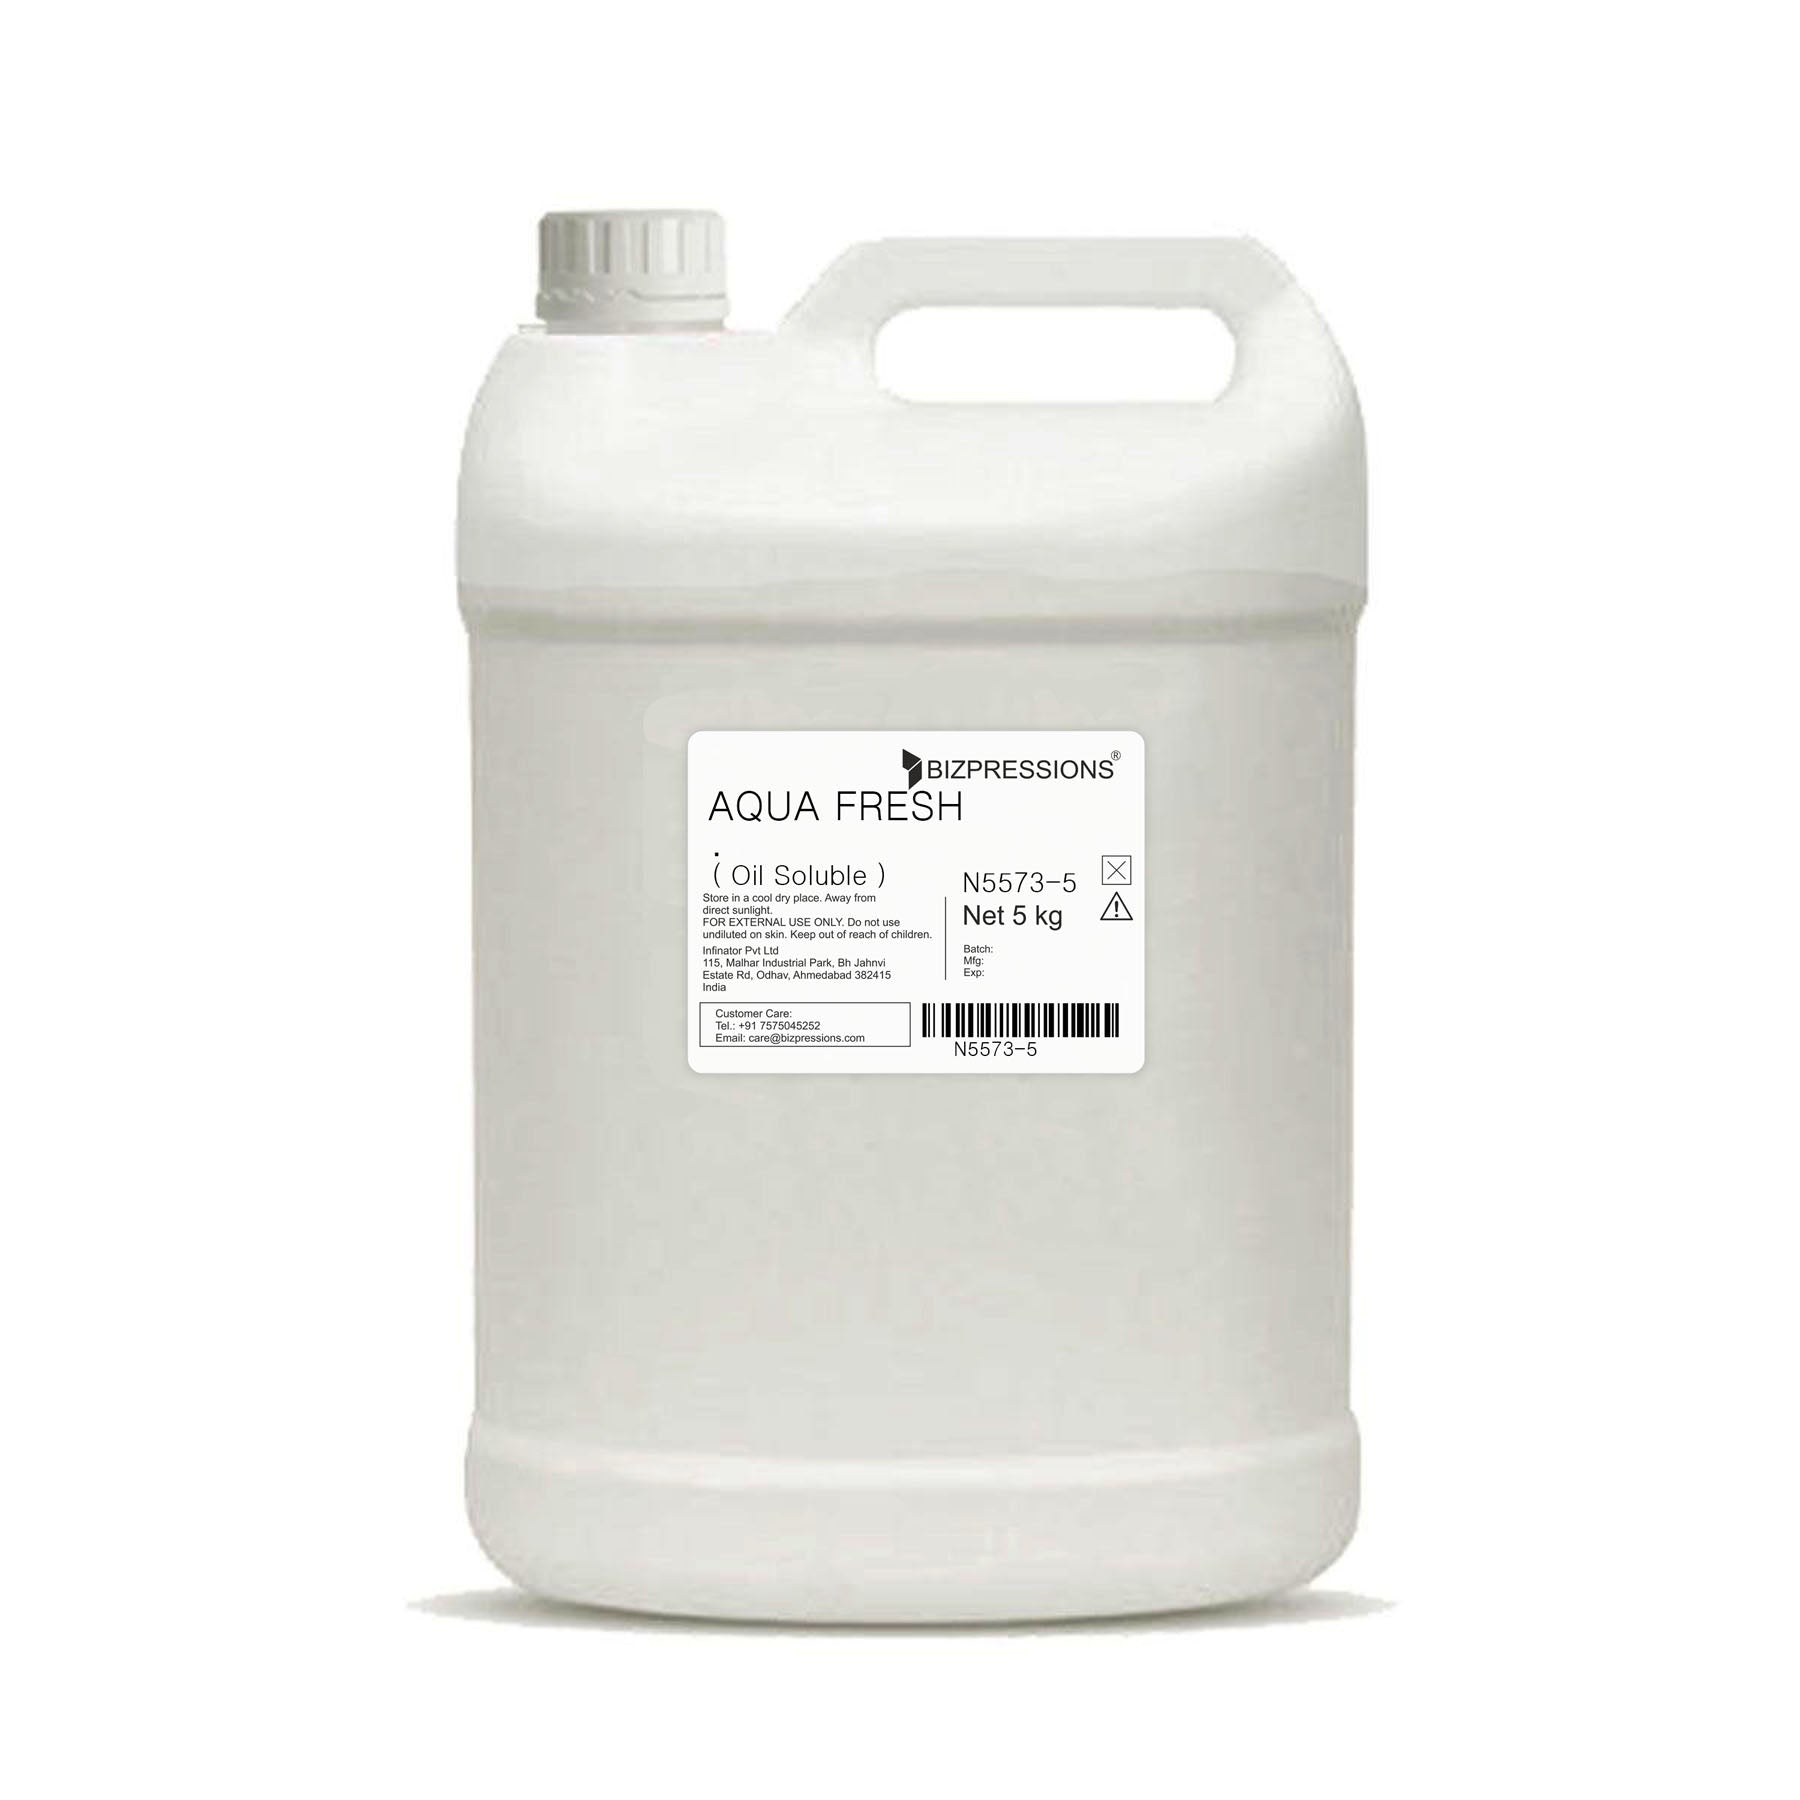 AQUA FRESH - Fragrance ( Oil Soluble ) - 5 kg